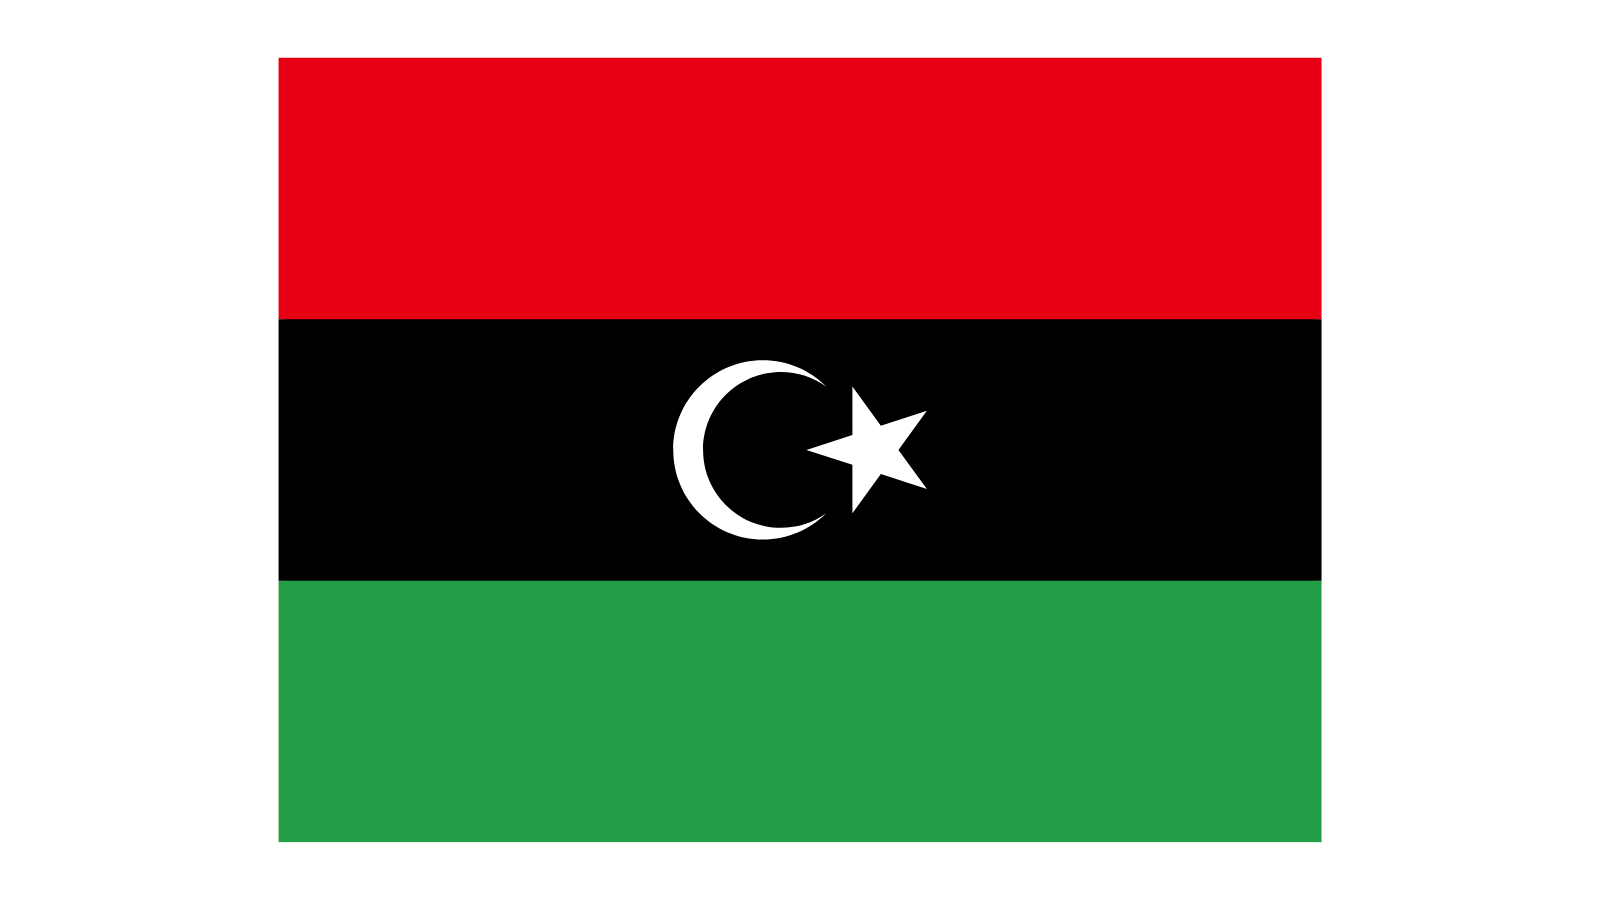 The Libyan Flag